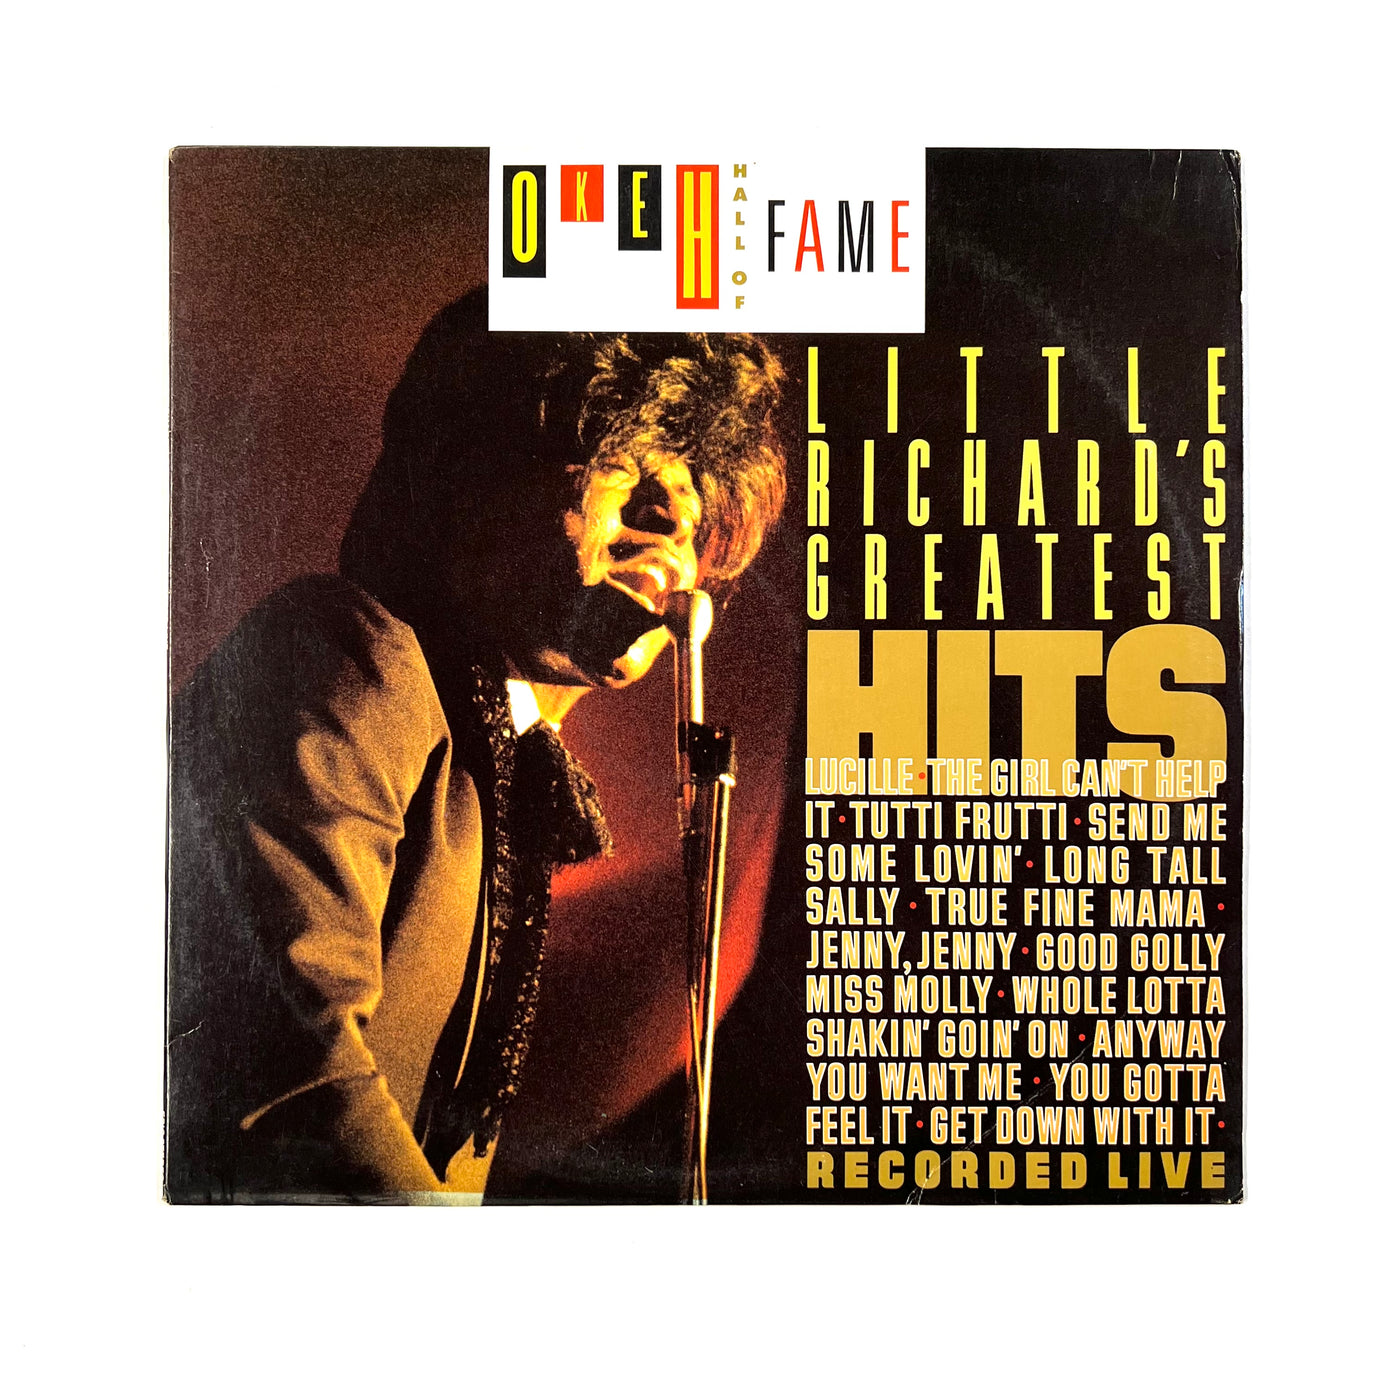 Little Richard - Little Richard's Greatest Hits Recorded Live (Okeh Hall Of Fame)